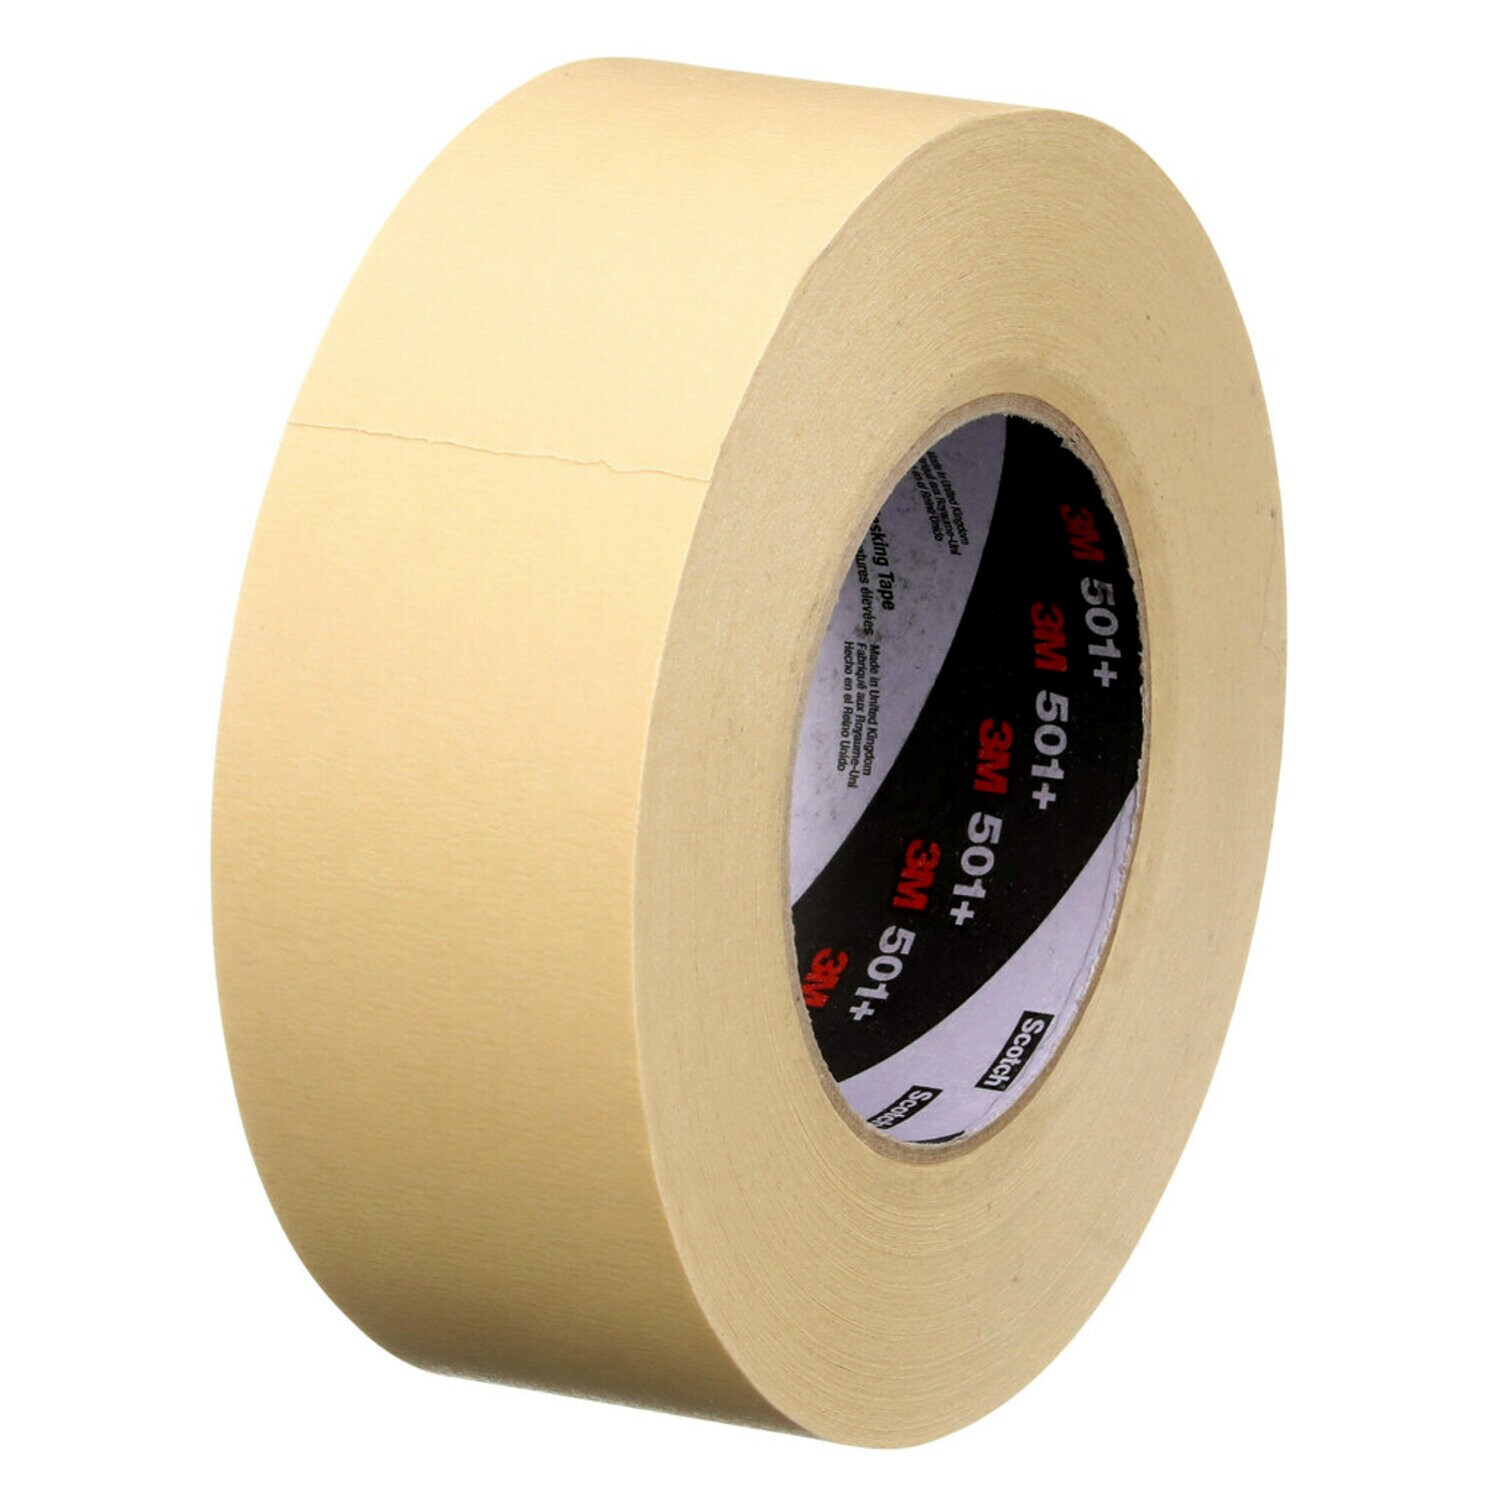 Adhesive tape BOPP 48mm/66m/50mic brown/transparent 72 units